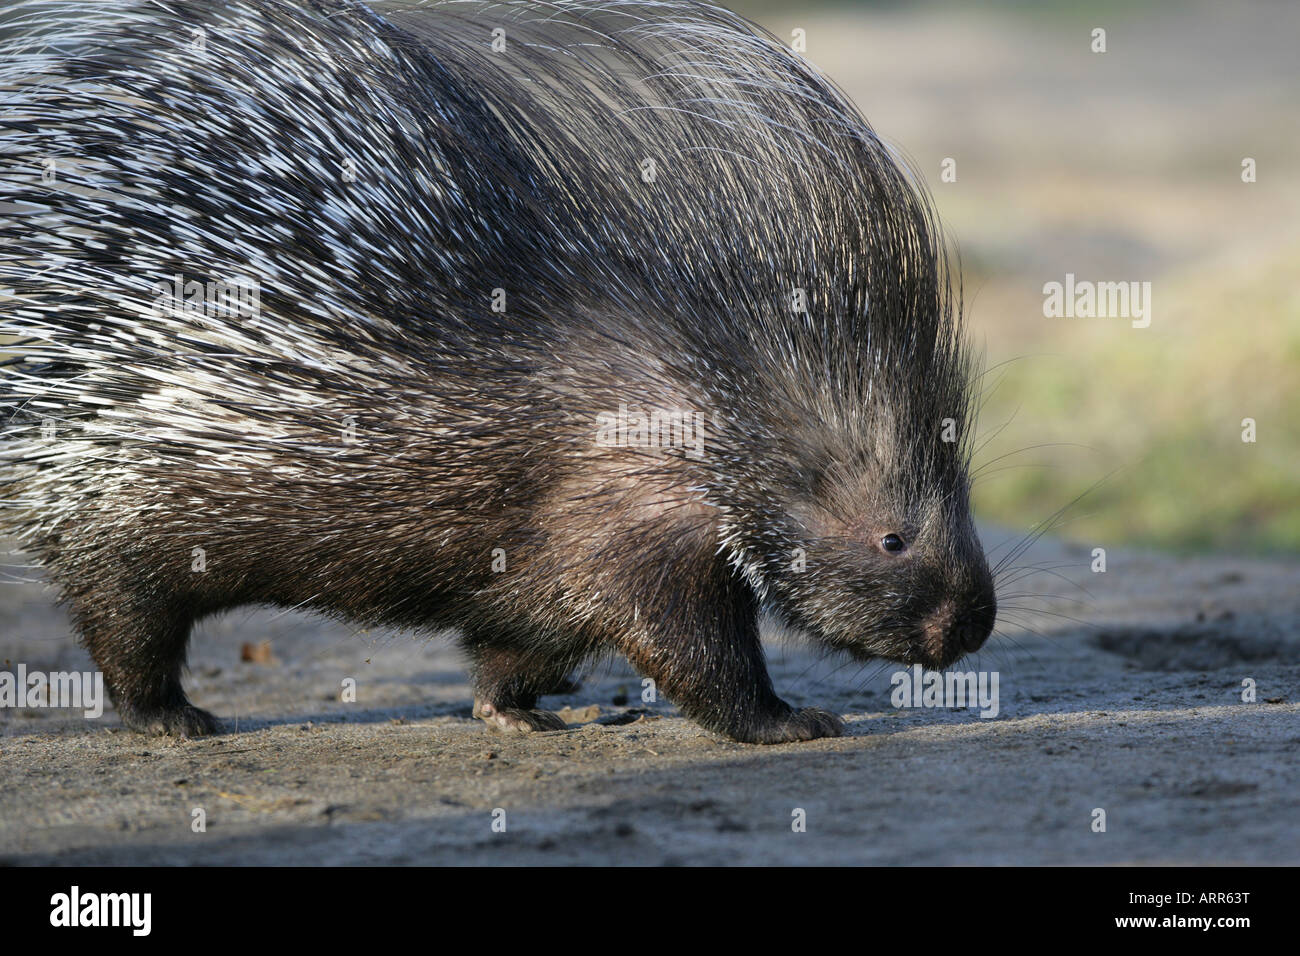 Indian crested porcupine - Hystrix leucura Stock Photo